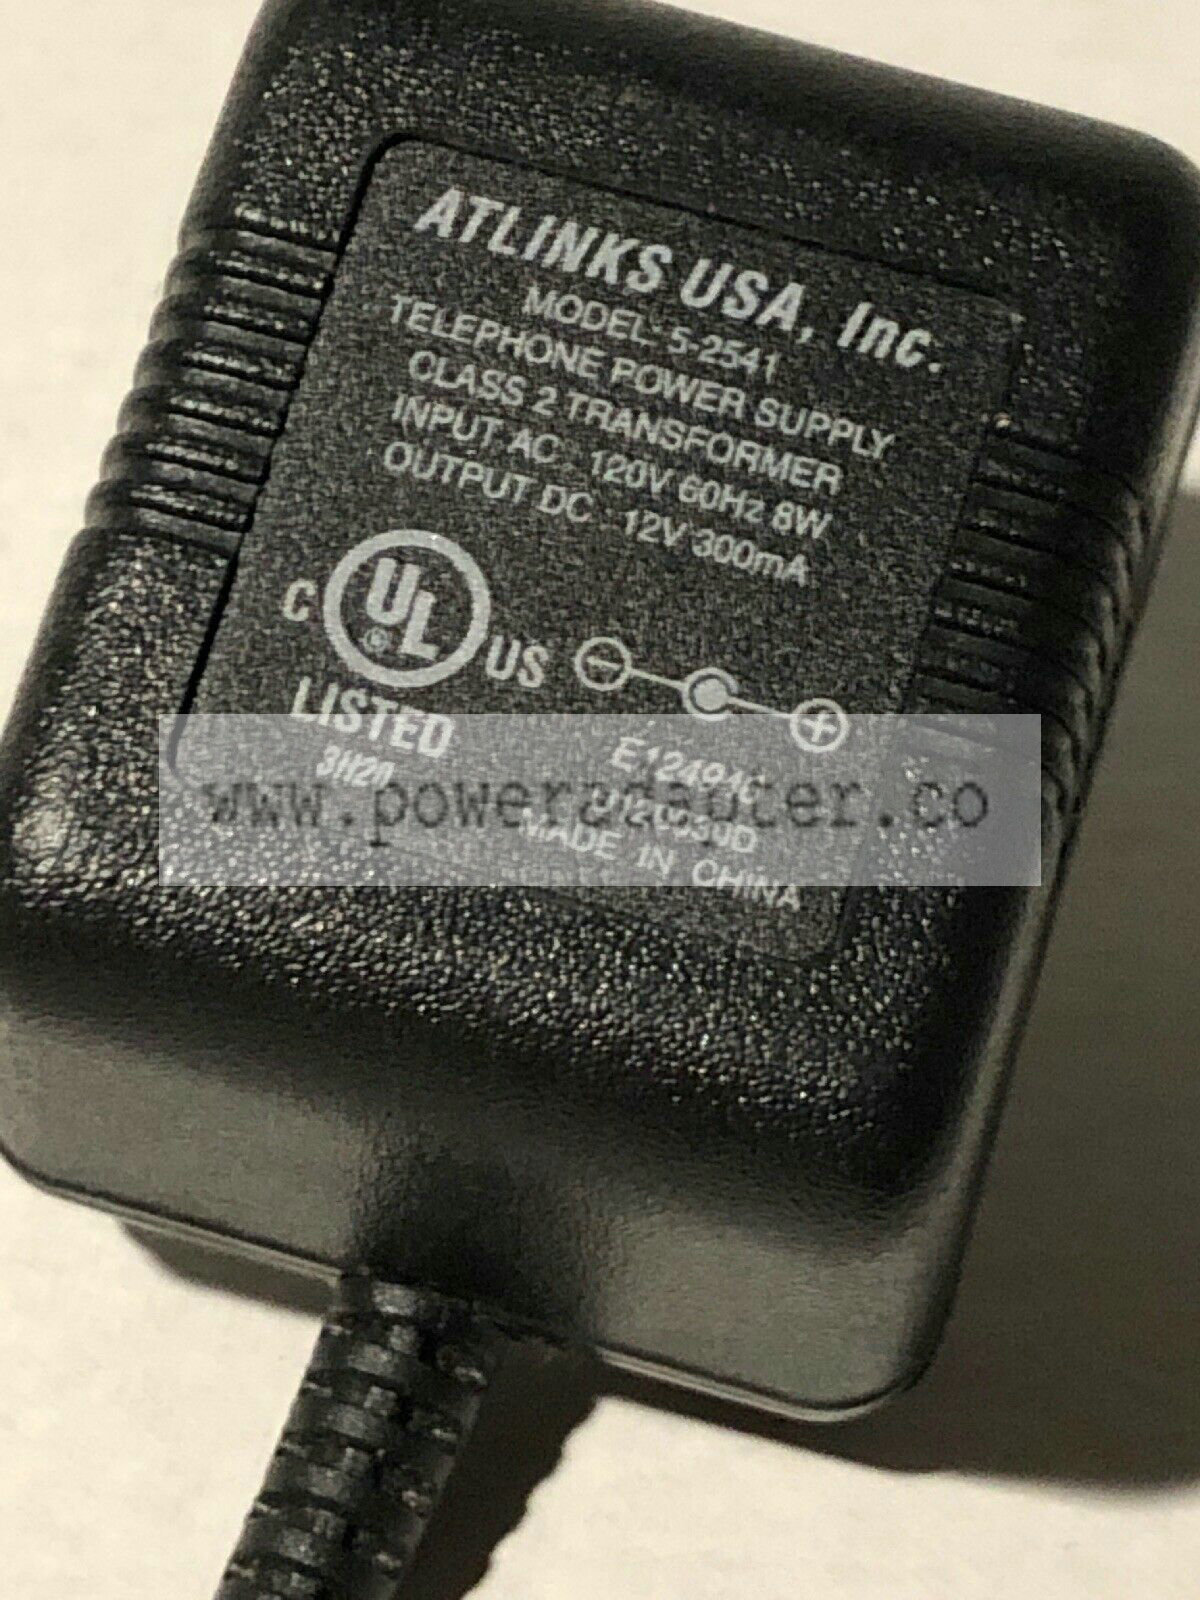 Atlinks USA 5-2541 Telephone Power Supply DC 12V 300mA Class 2 Transformer Product Type: Transformer Output Voltage: - Click Image to Close